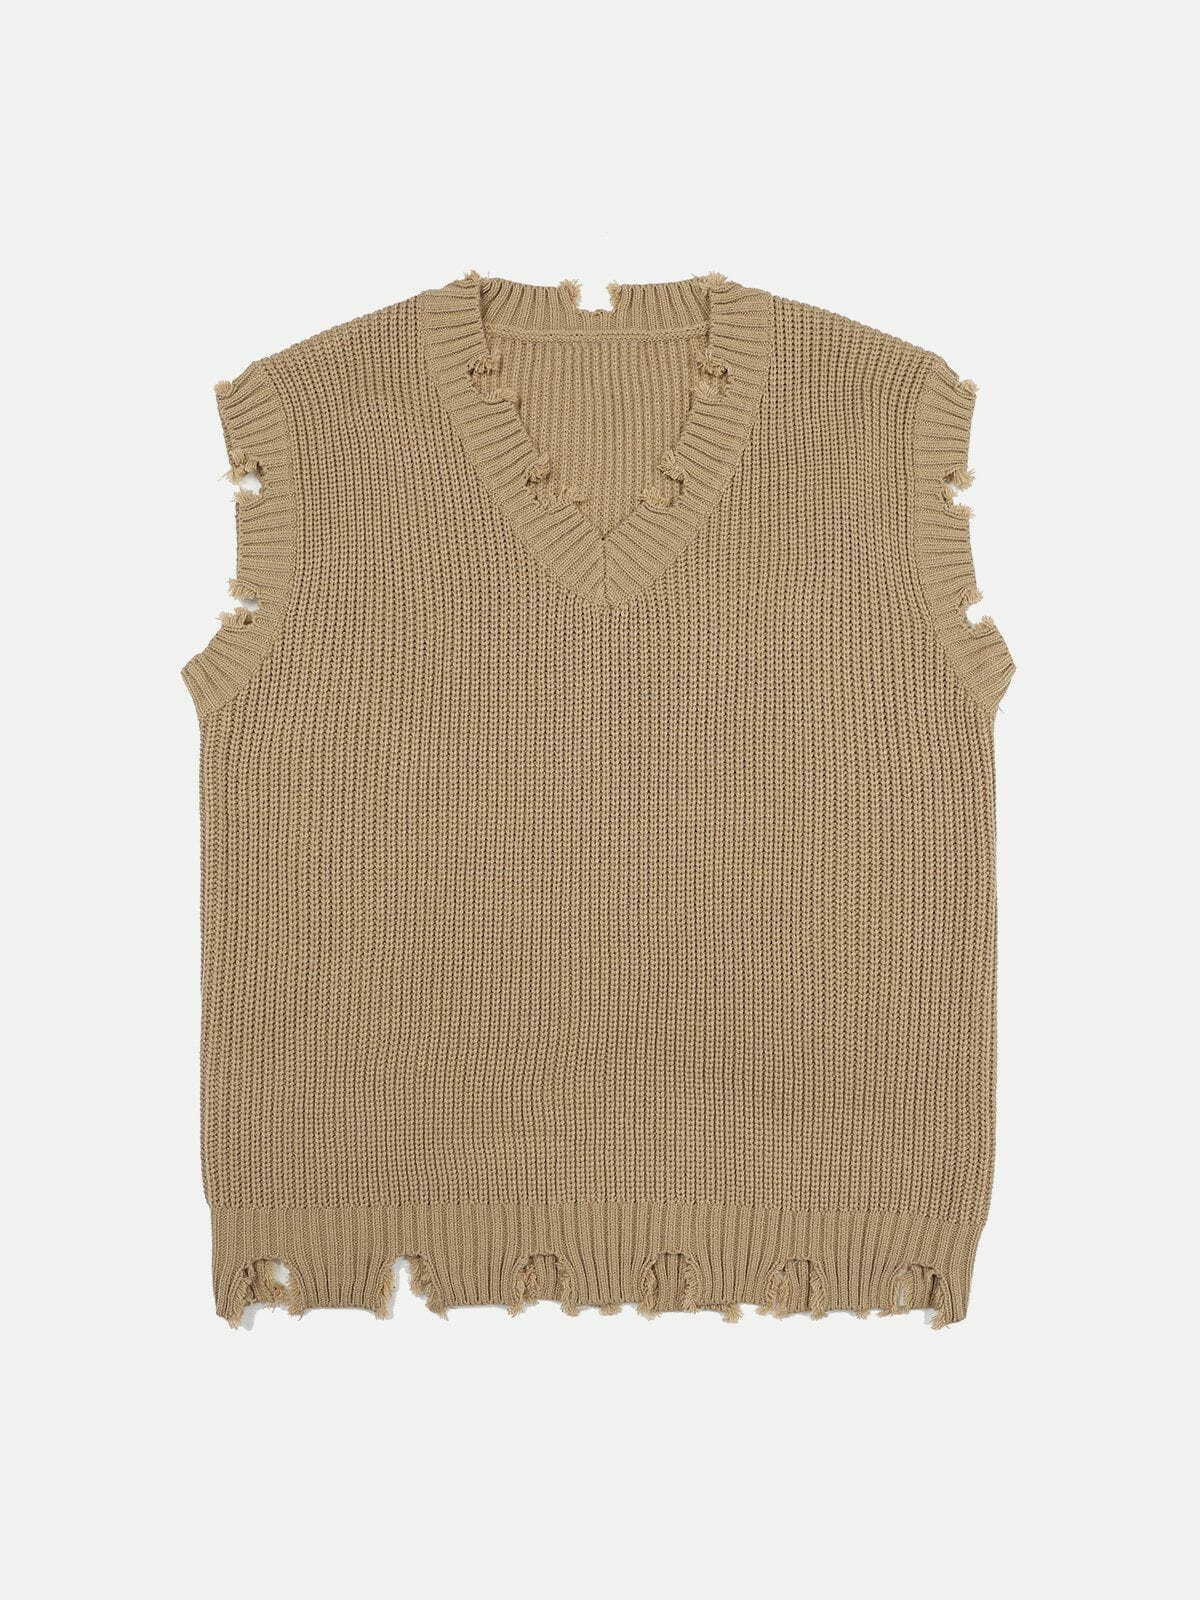 breakaway solid color sweater vest edgy y2k streetwear icon 1009